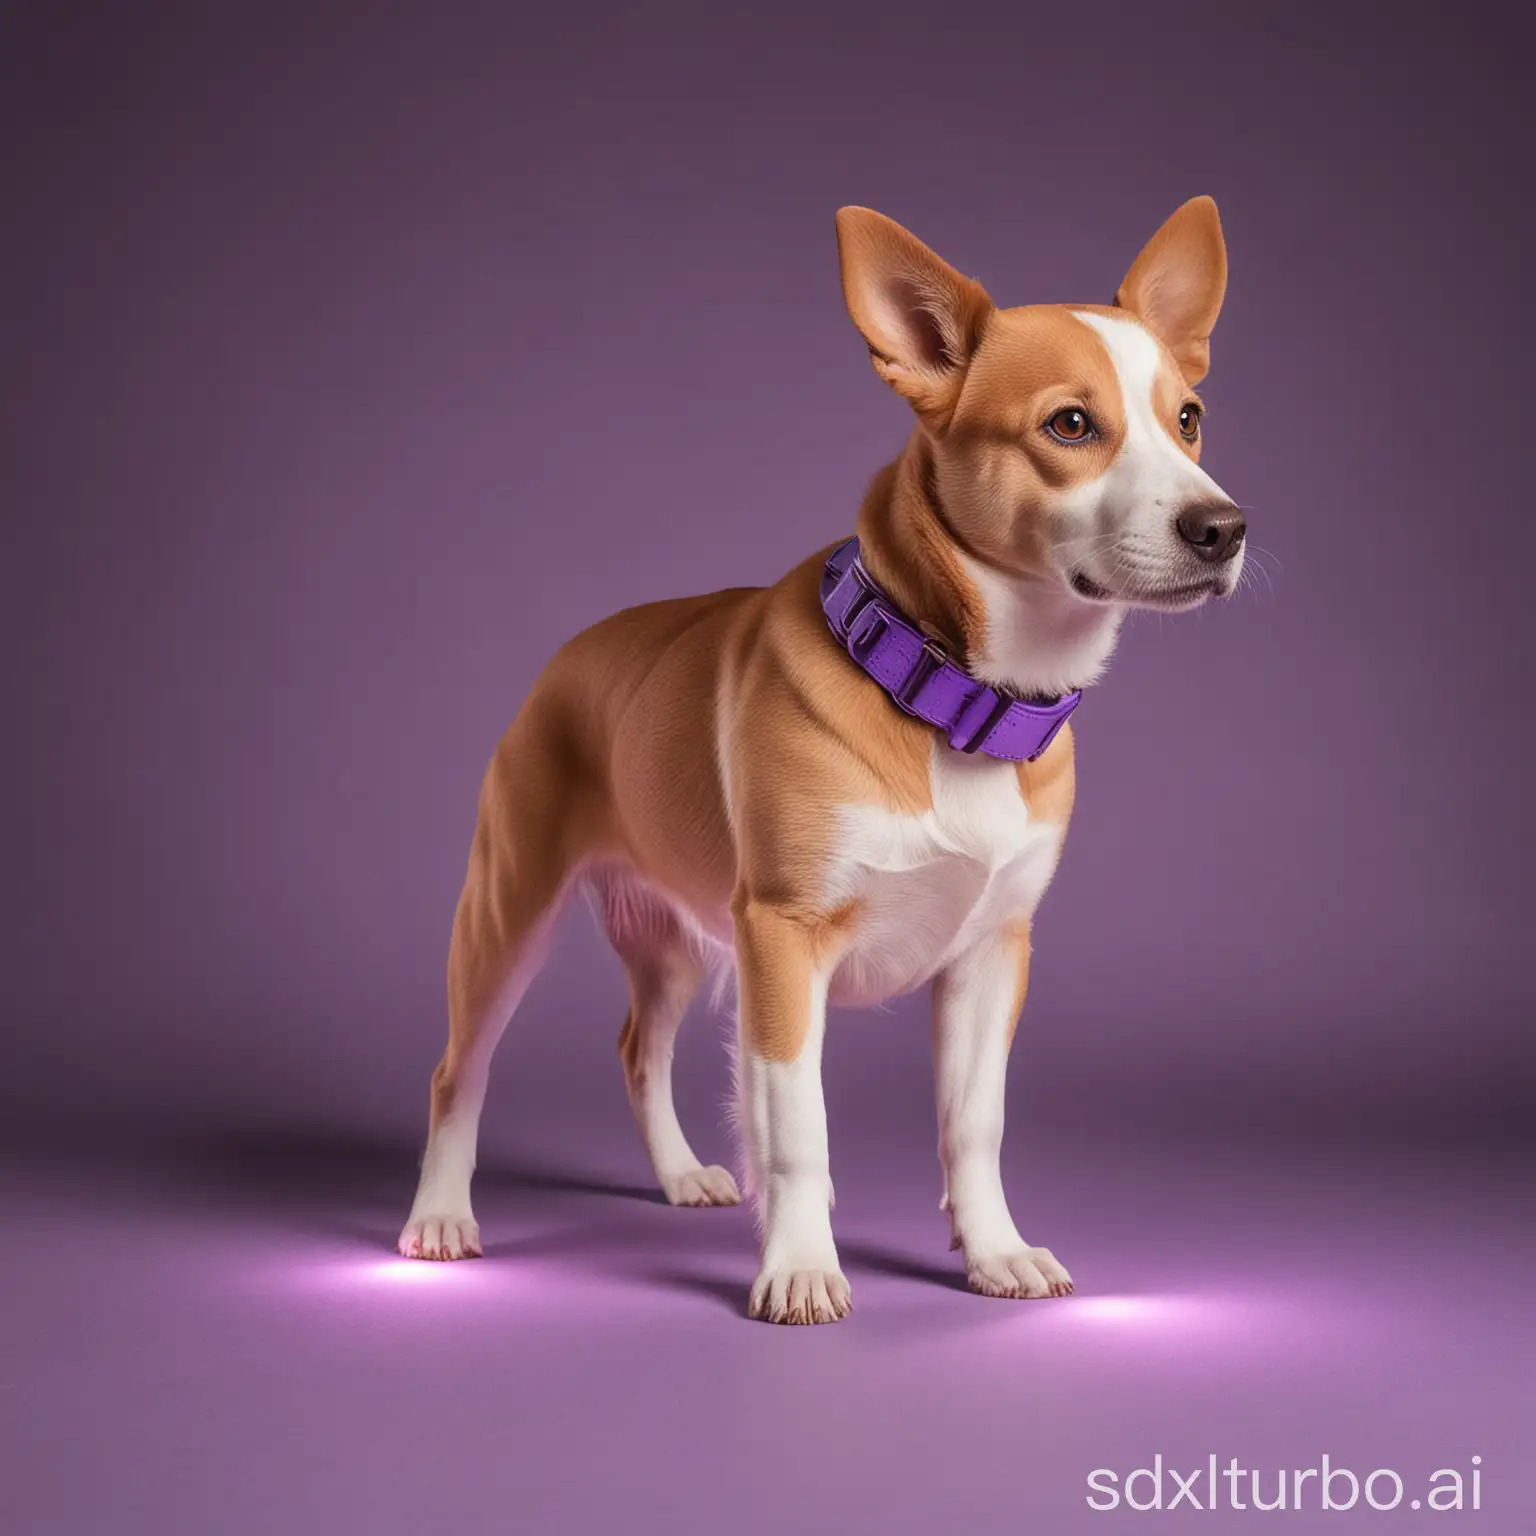 Higlight for instagram dog training violet colour